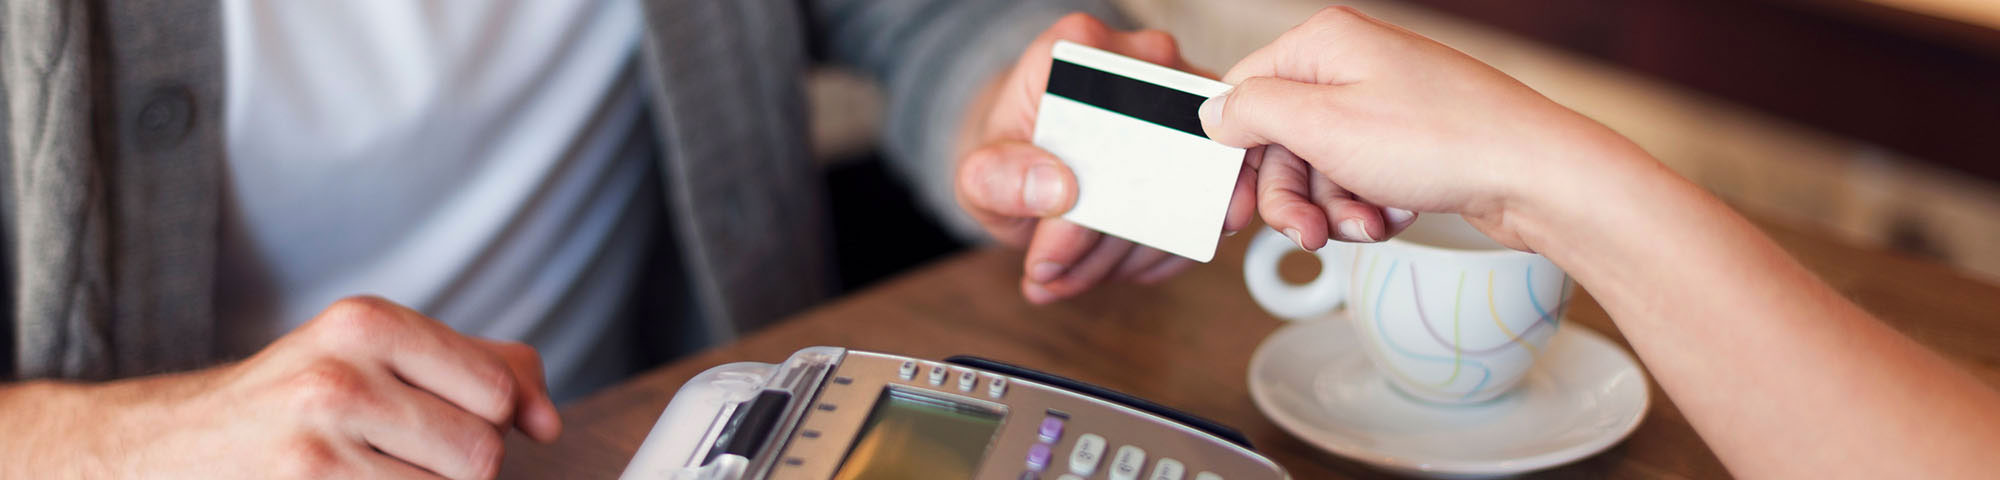 Visa® Check Card and ATM Card